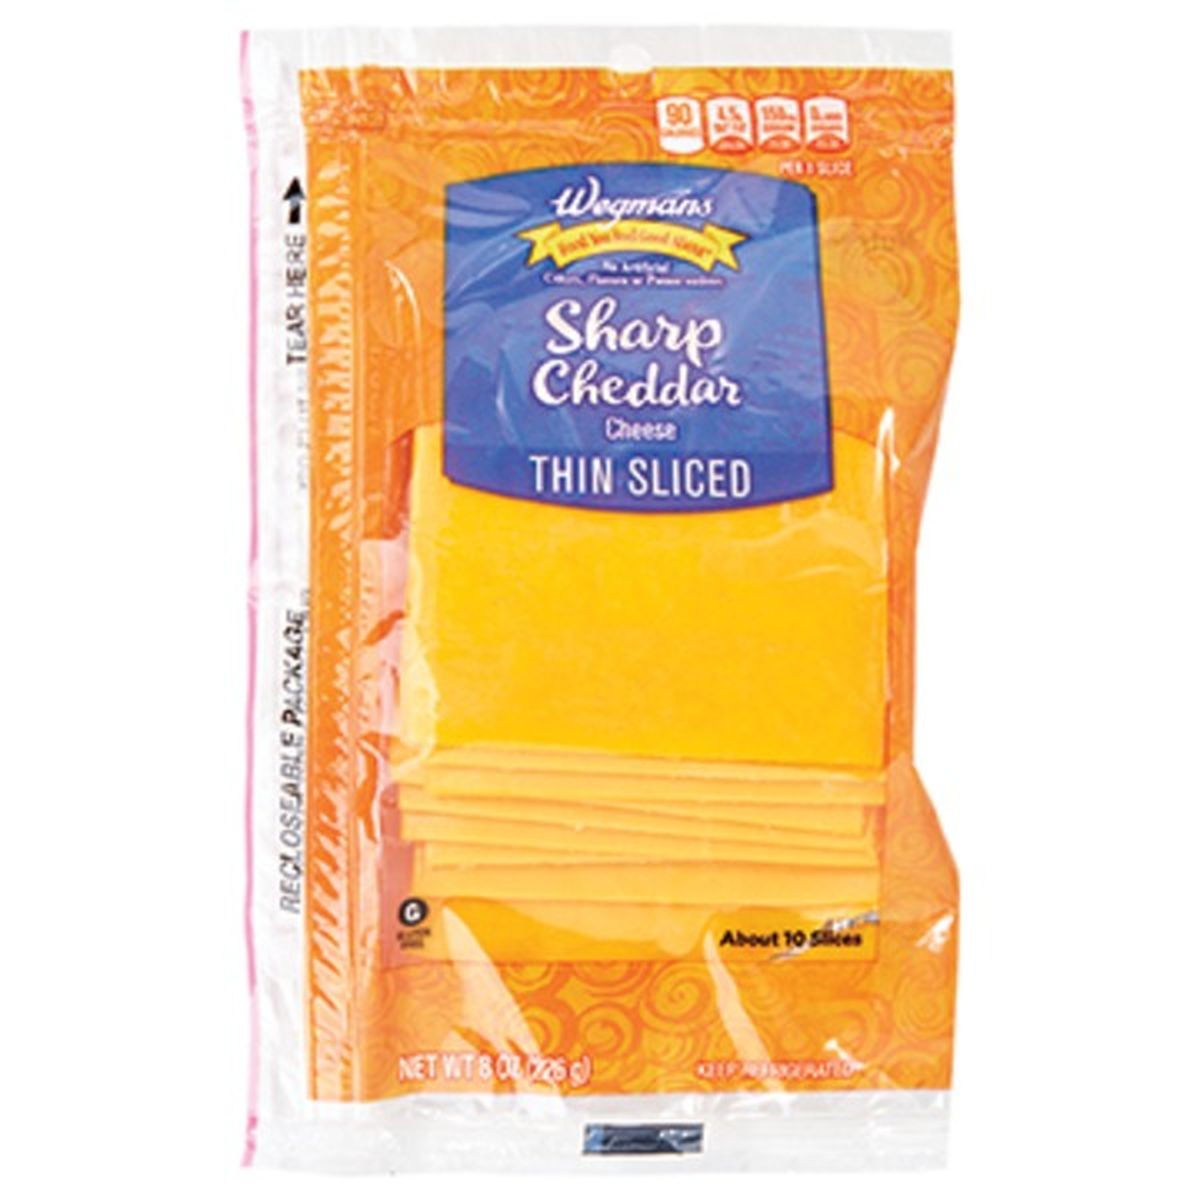 Calories in Wegmans Sharp Cheddar Cheese, Thin Sliced